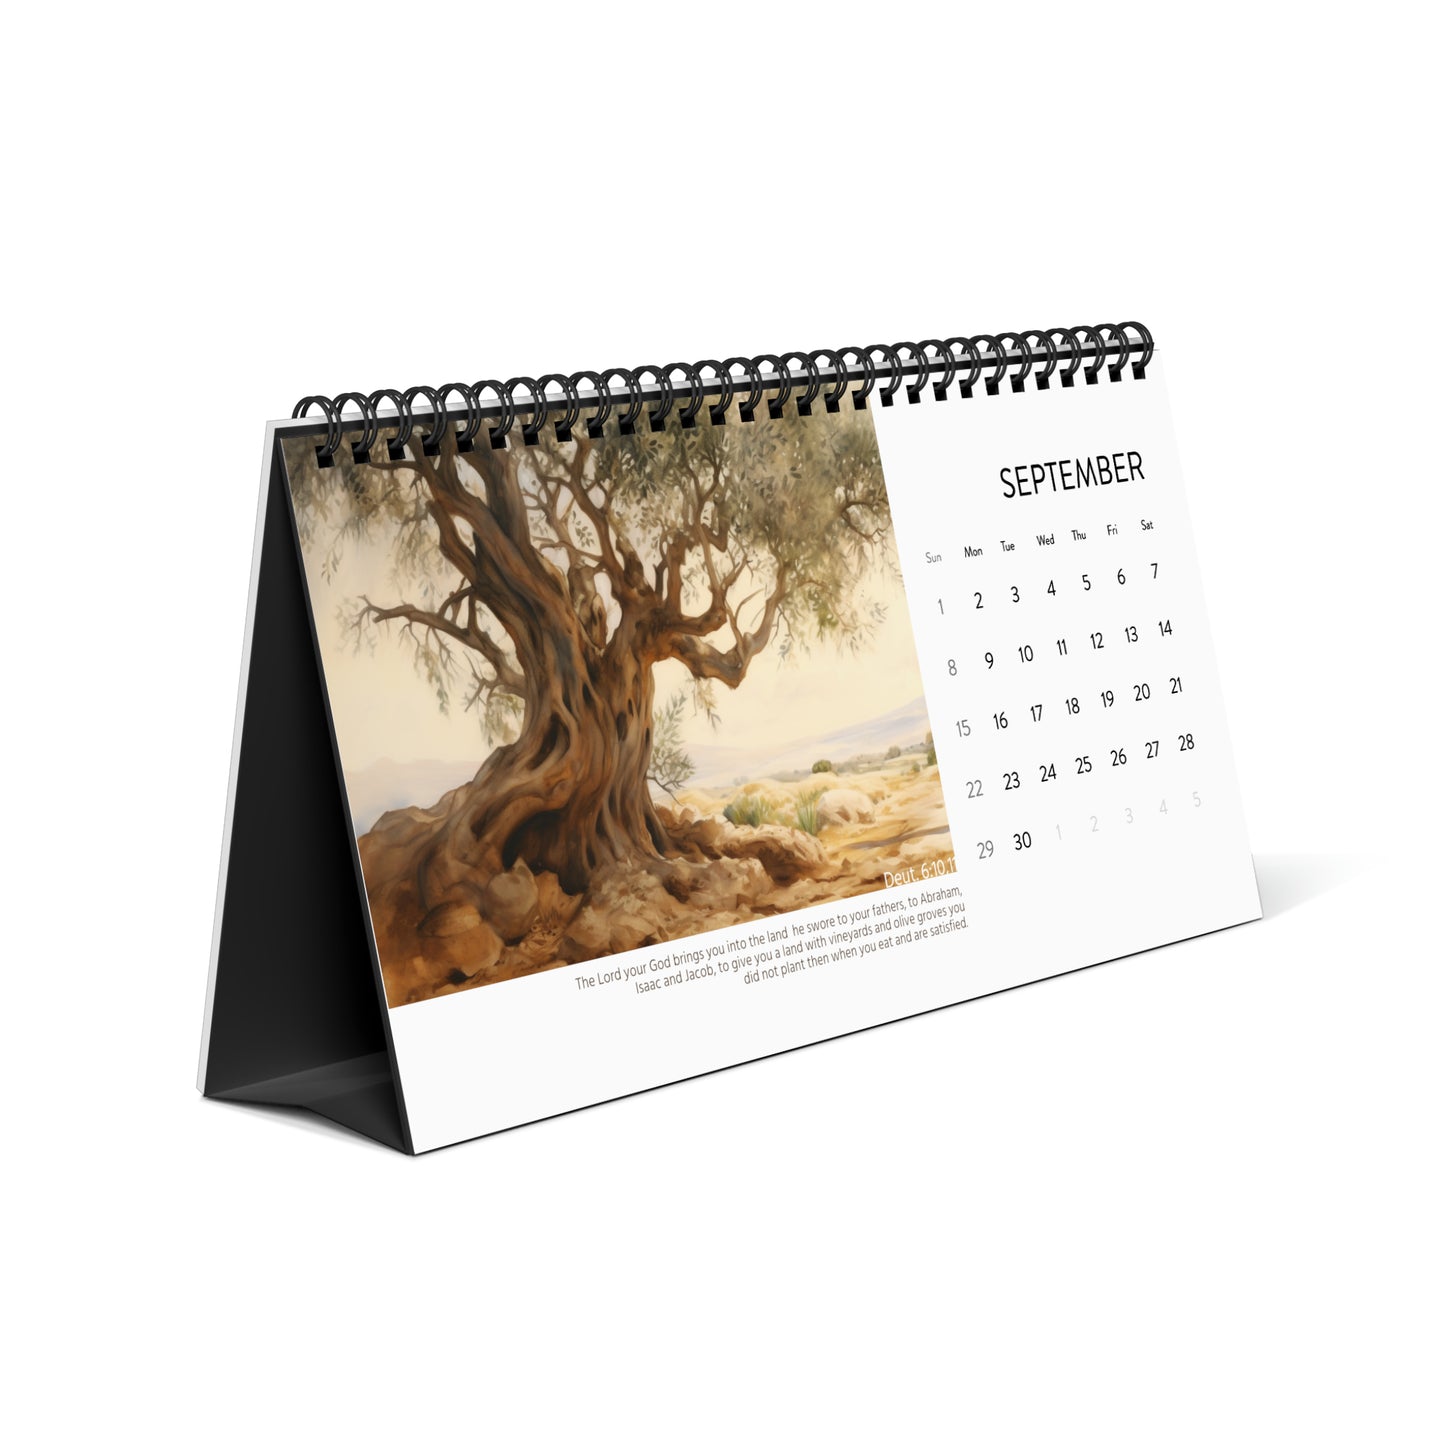 Olive Tree Desktop Calendar 2024